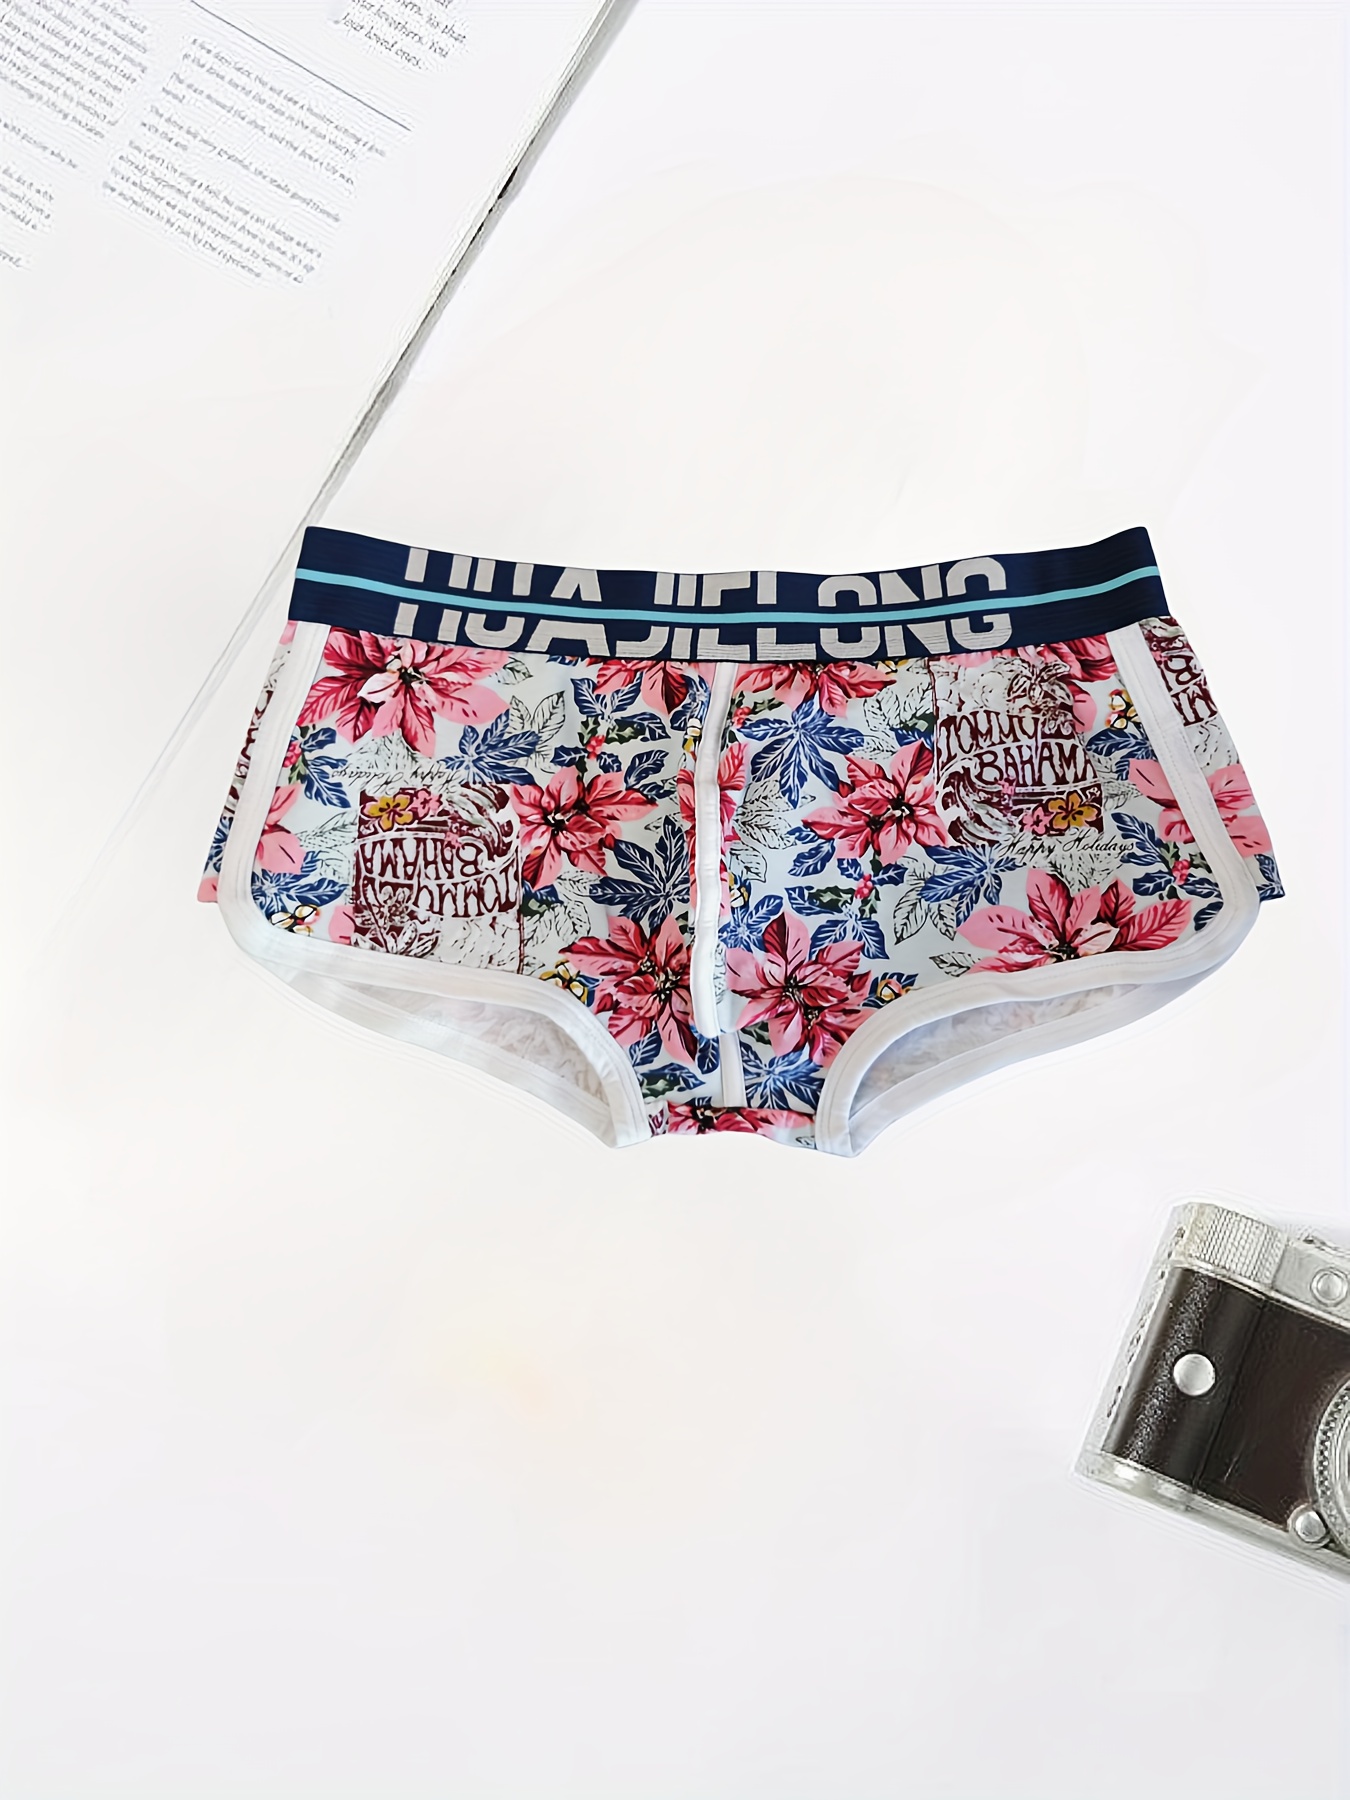 Floral Print Mens Underwear colellction